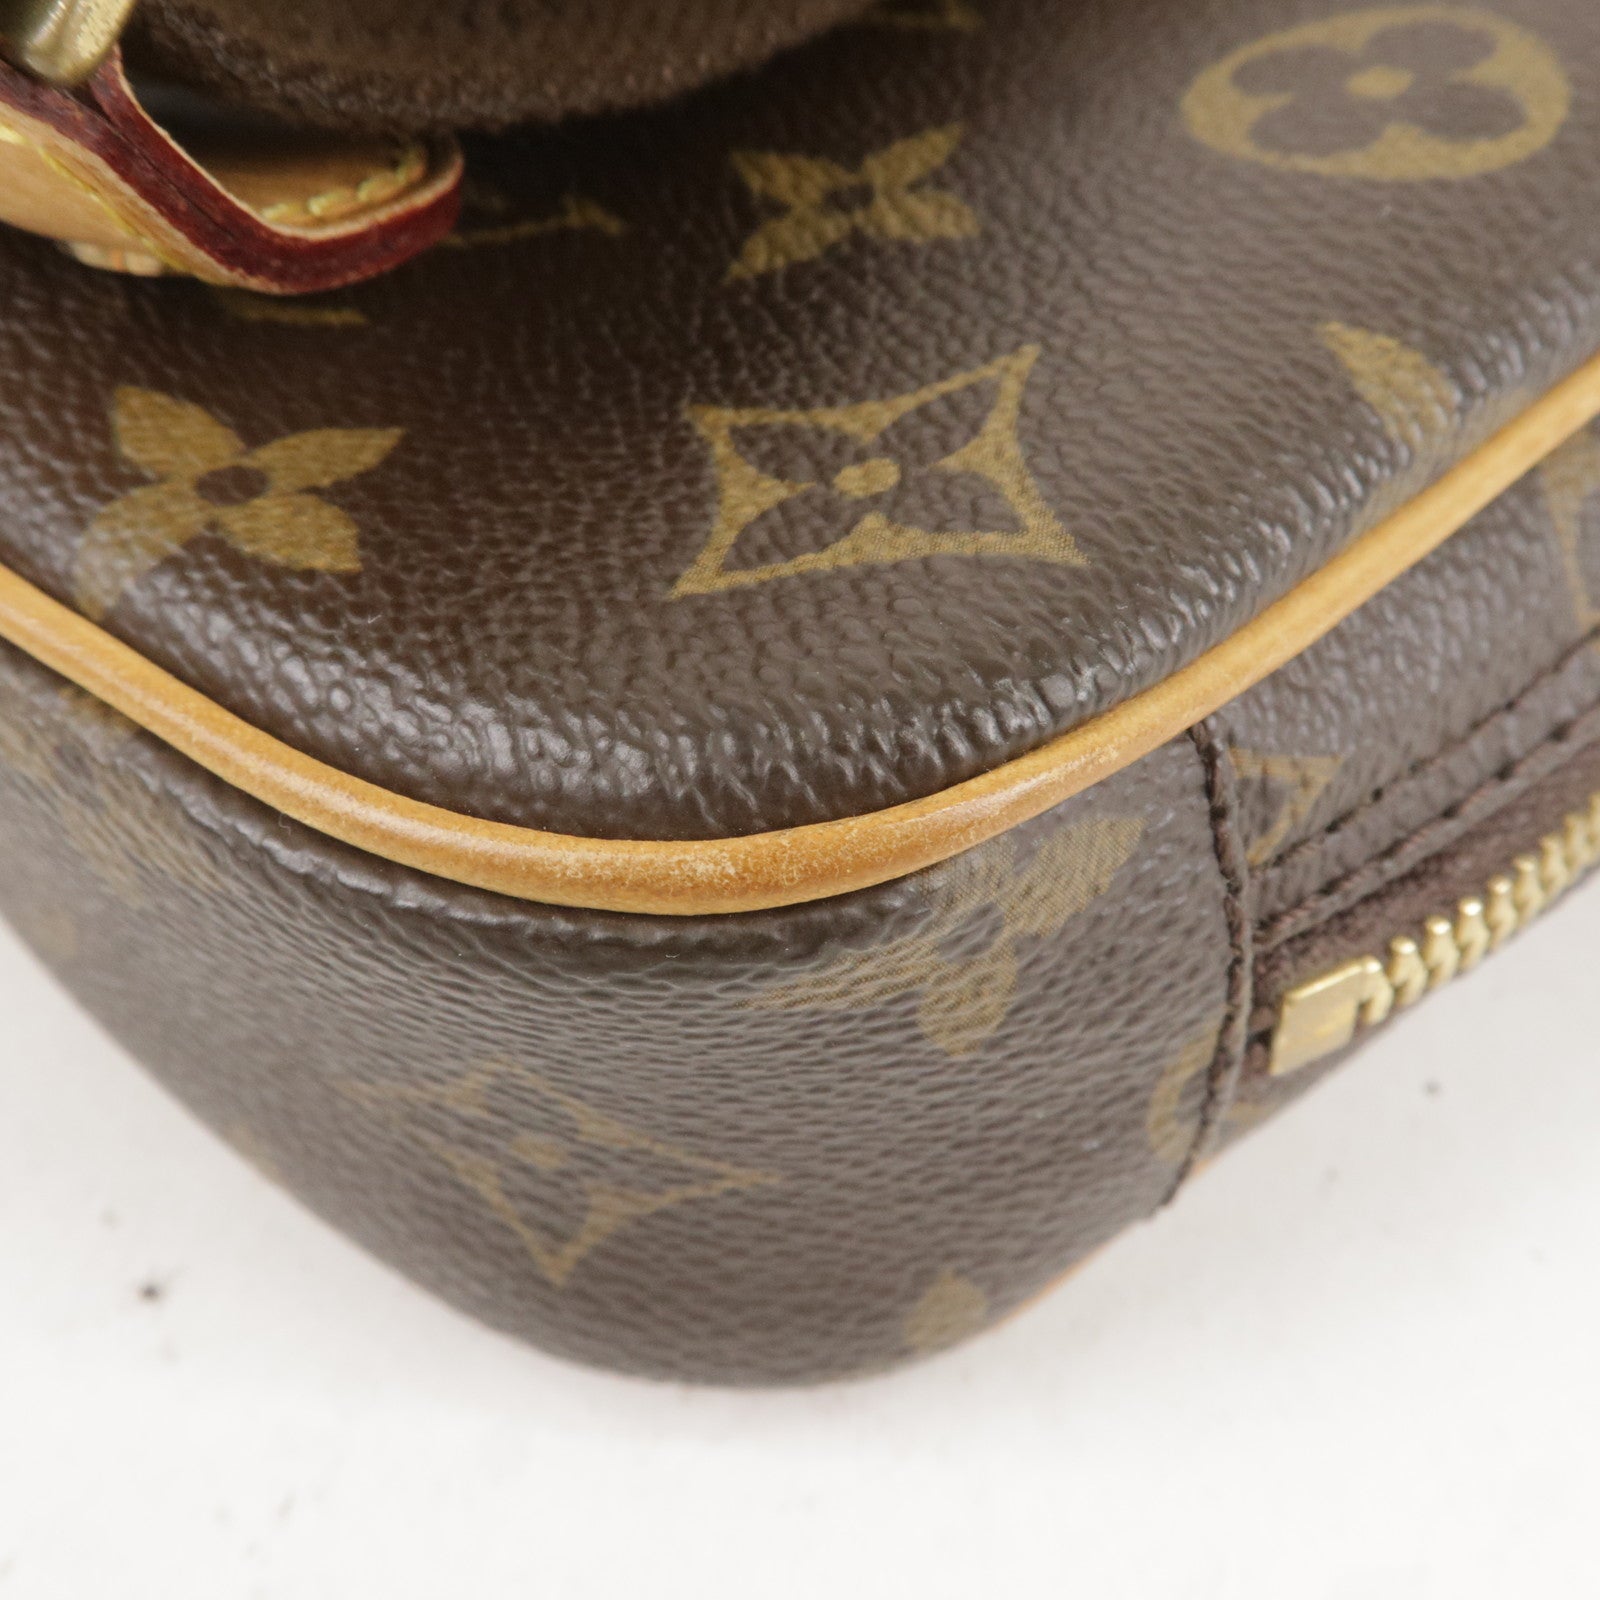 Pochette Monogram Handbag Louis Vuitton, buy pre-owned at 750 EUR